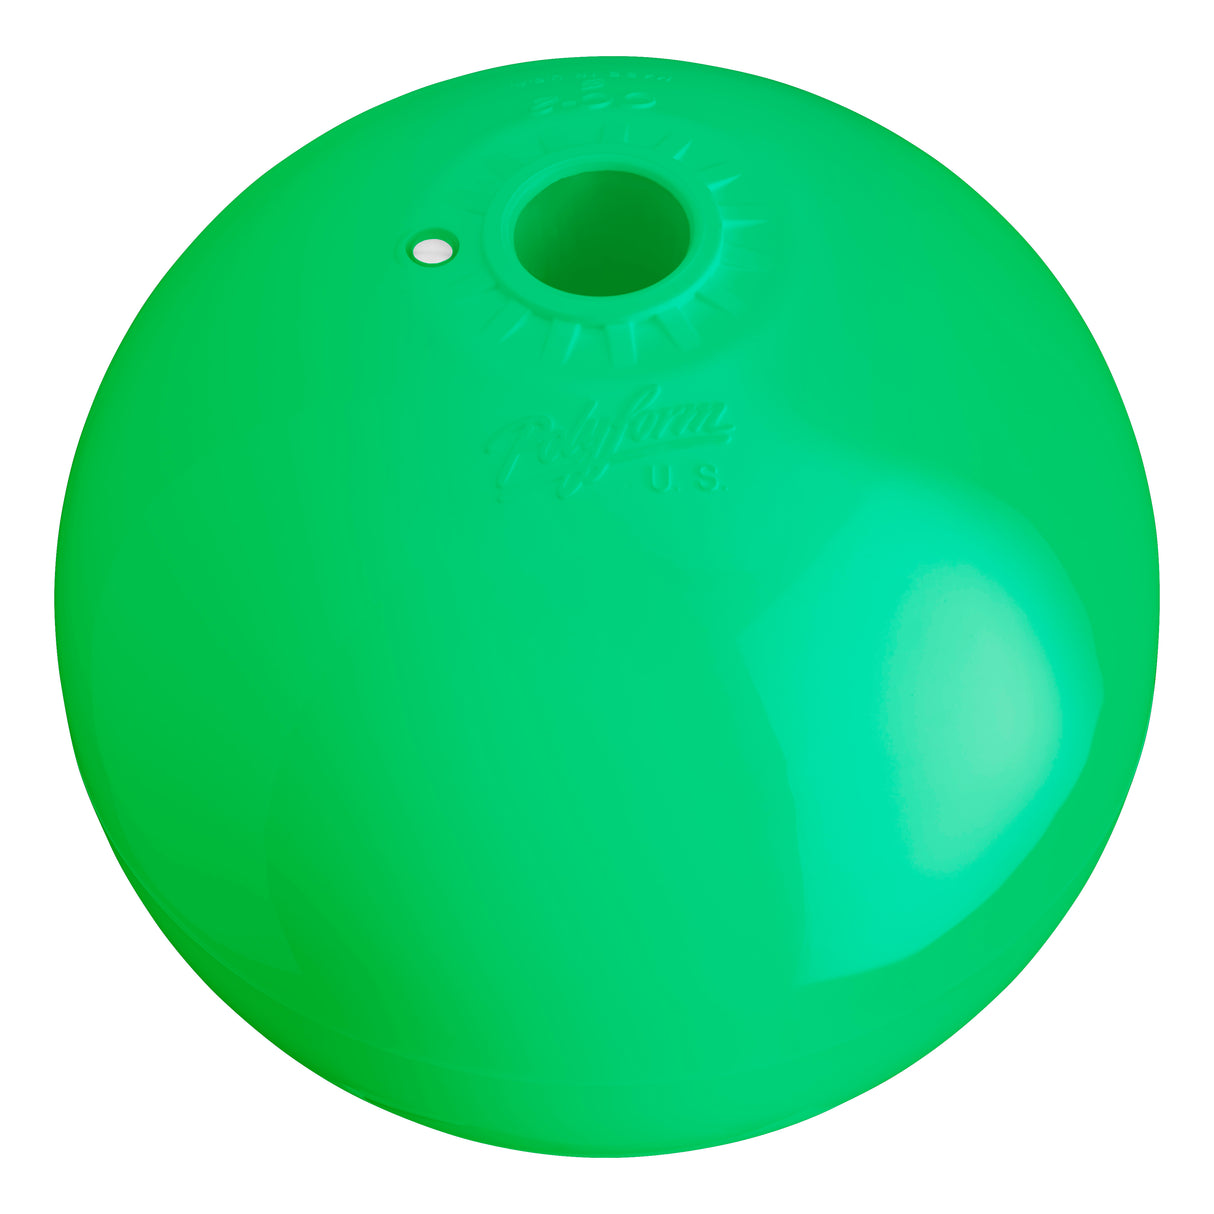 Hole through center mooring and marker buoy, Polyform CC-5 Green angled shot